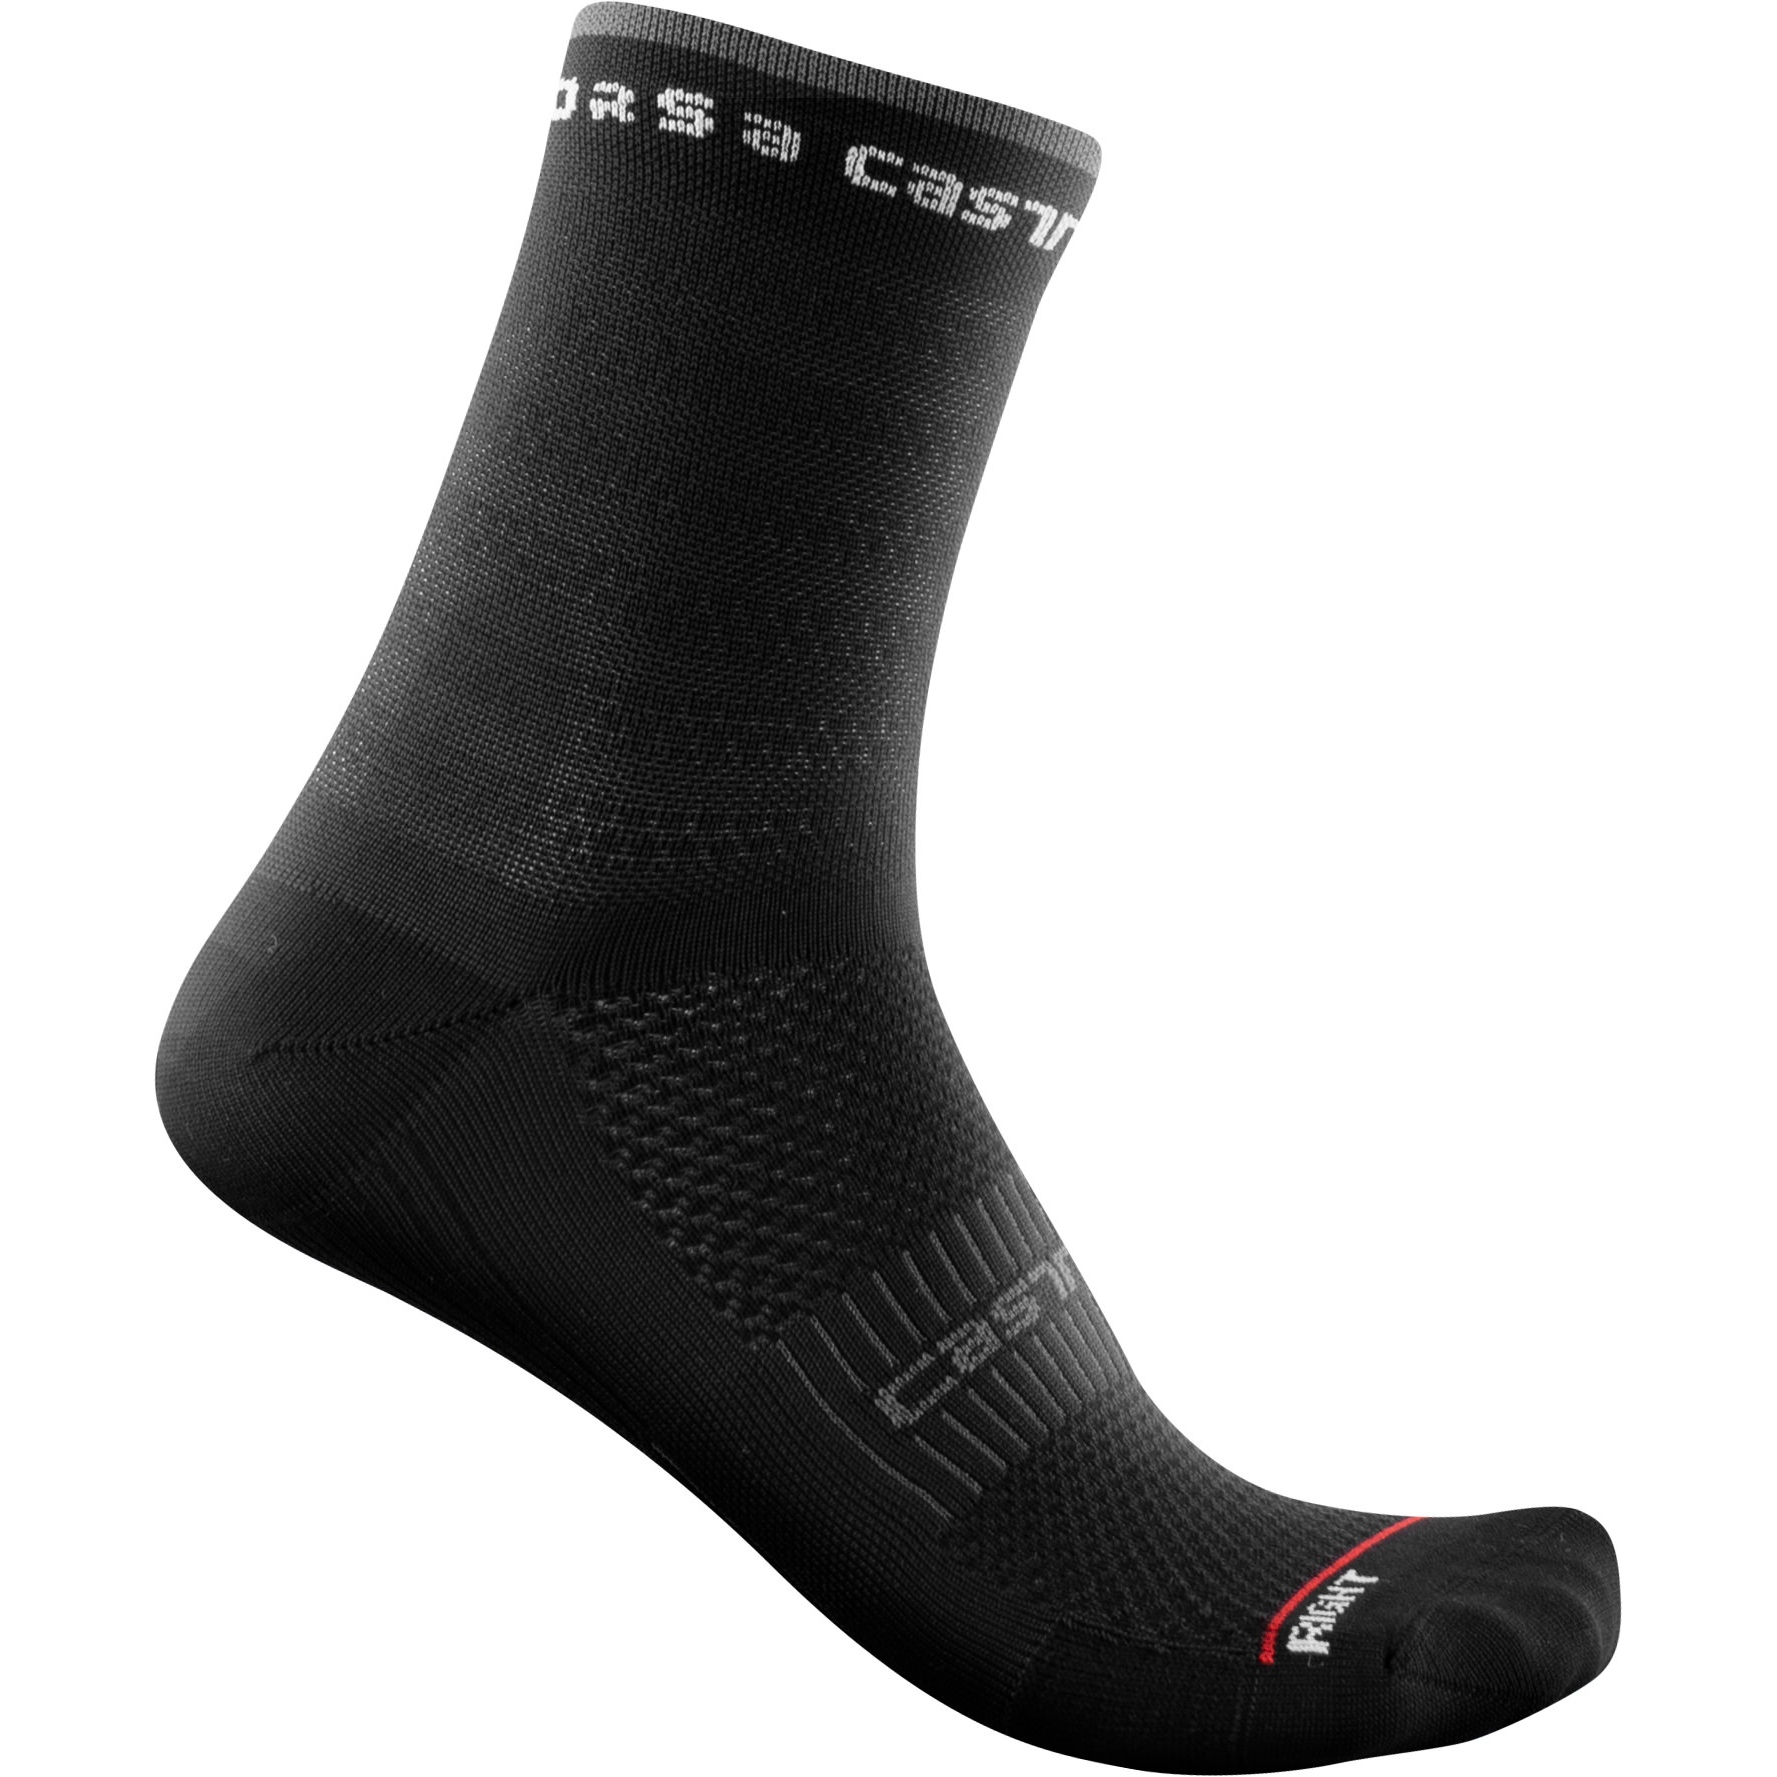 Productfoto van Castelli Rosso Corsa 11 Sokken Dames - black 010